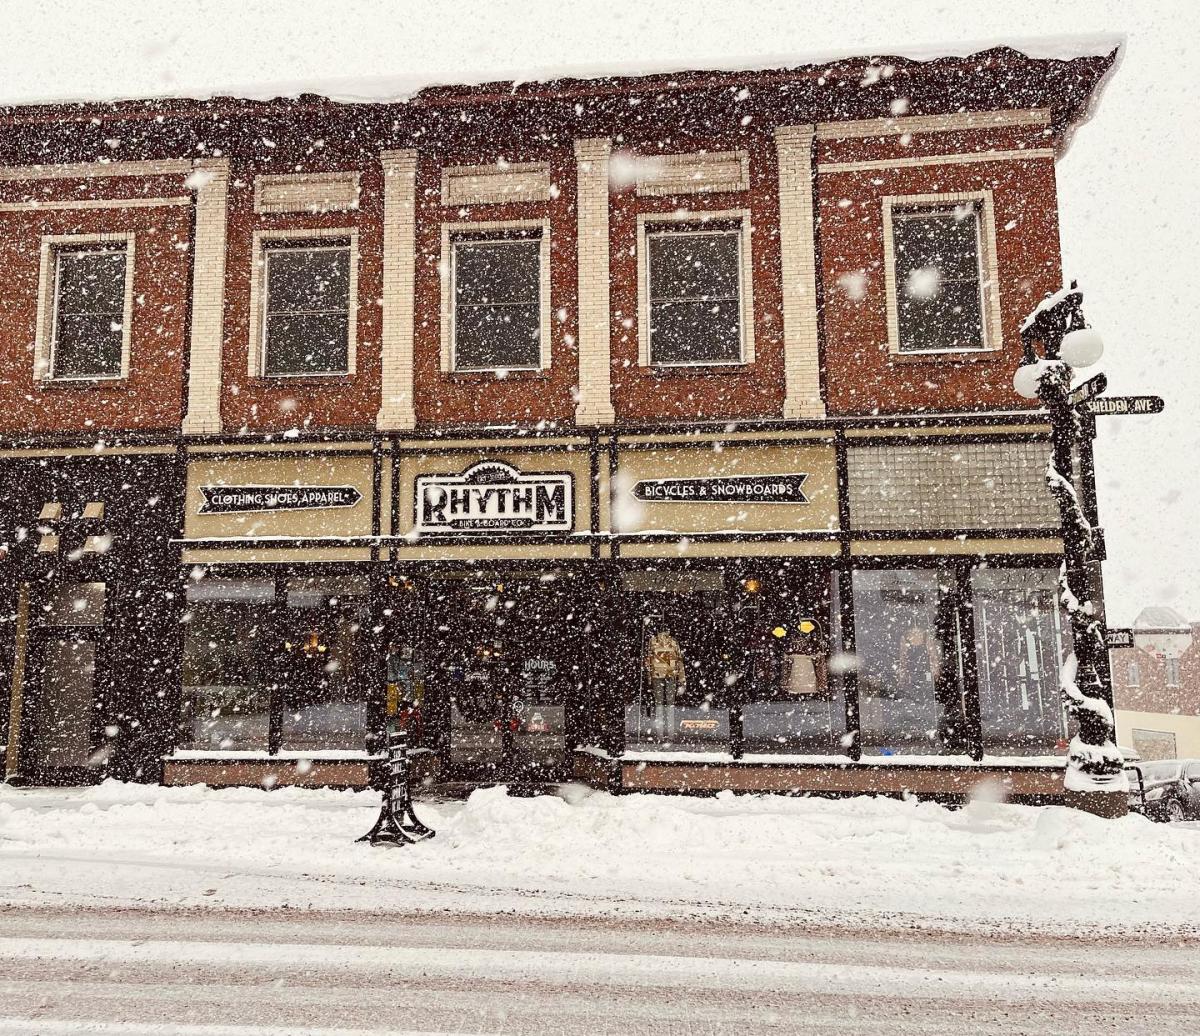 Rhythm storefront on a snowy day.